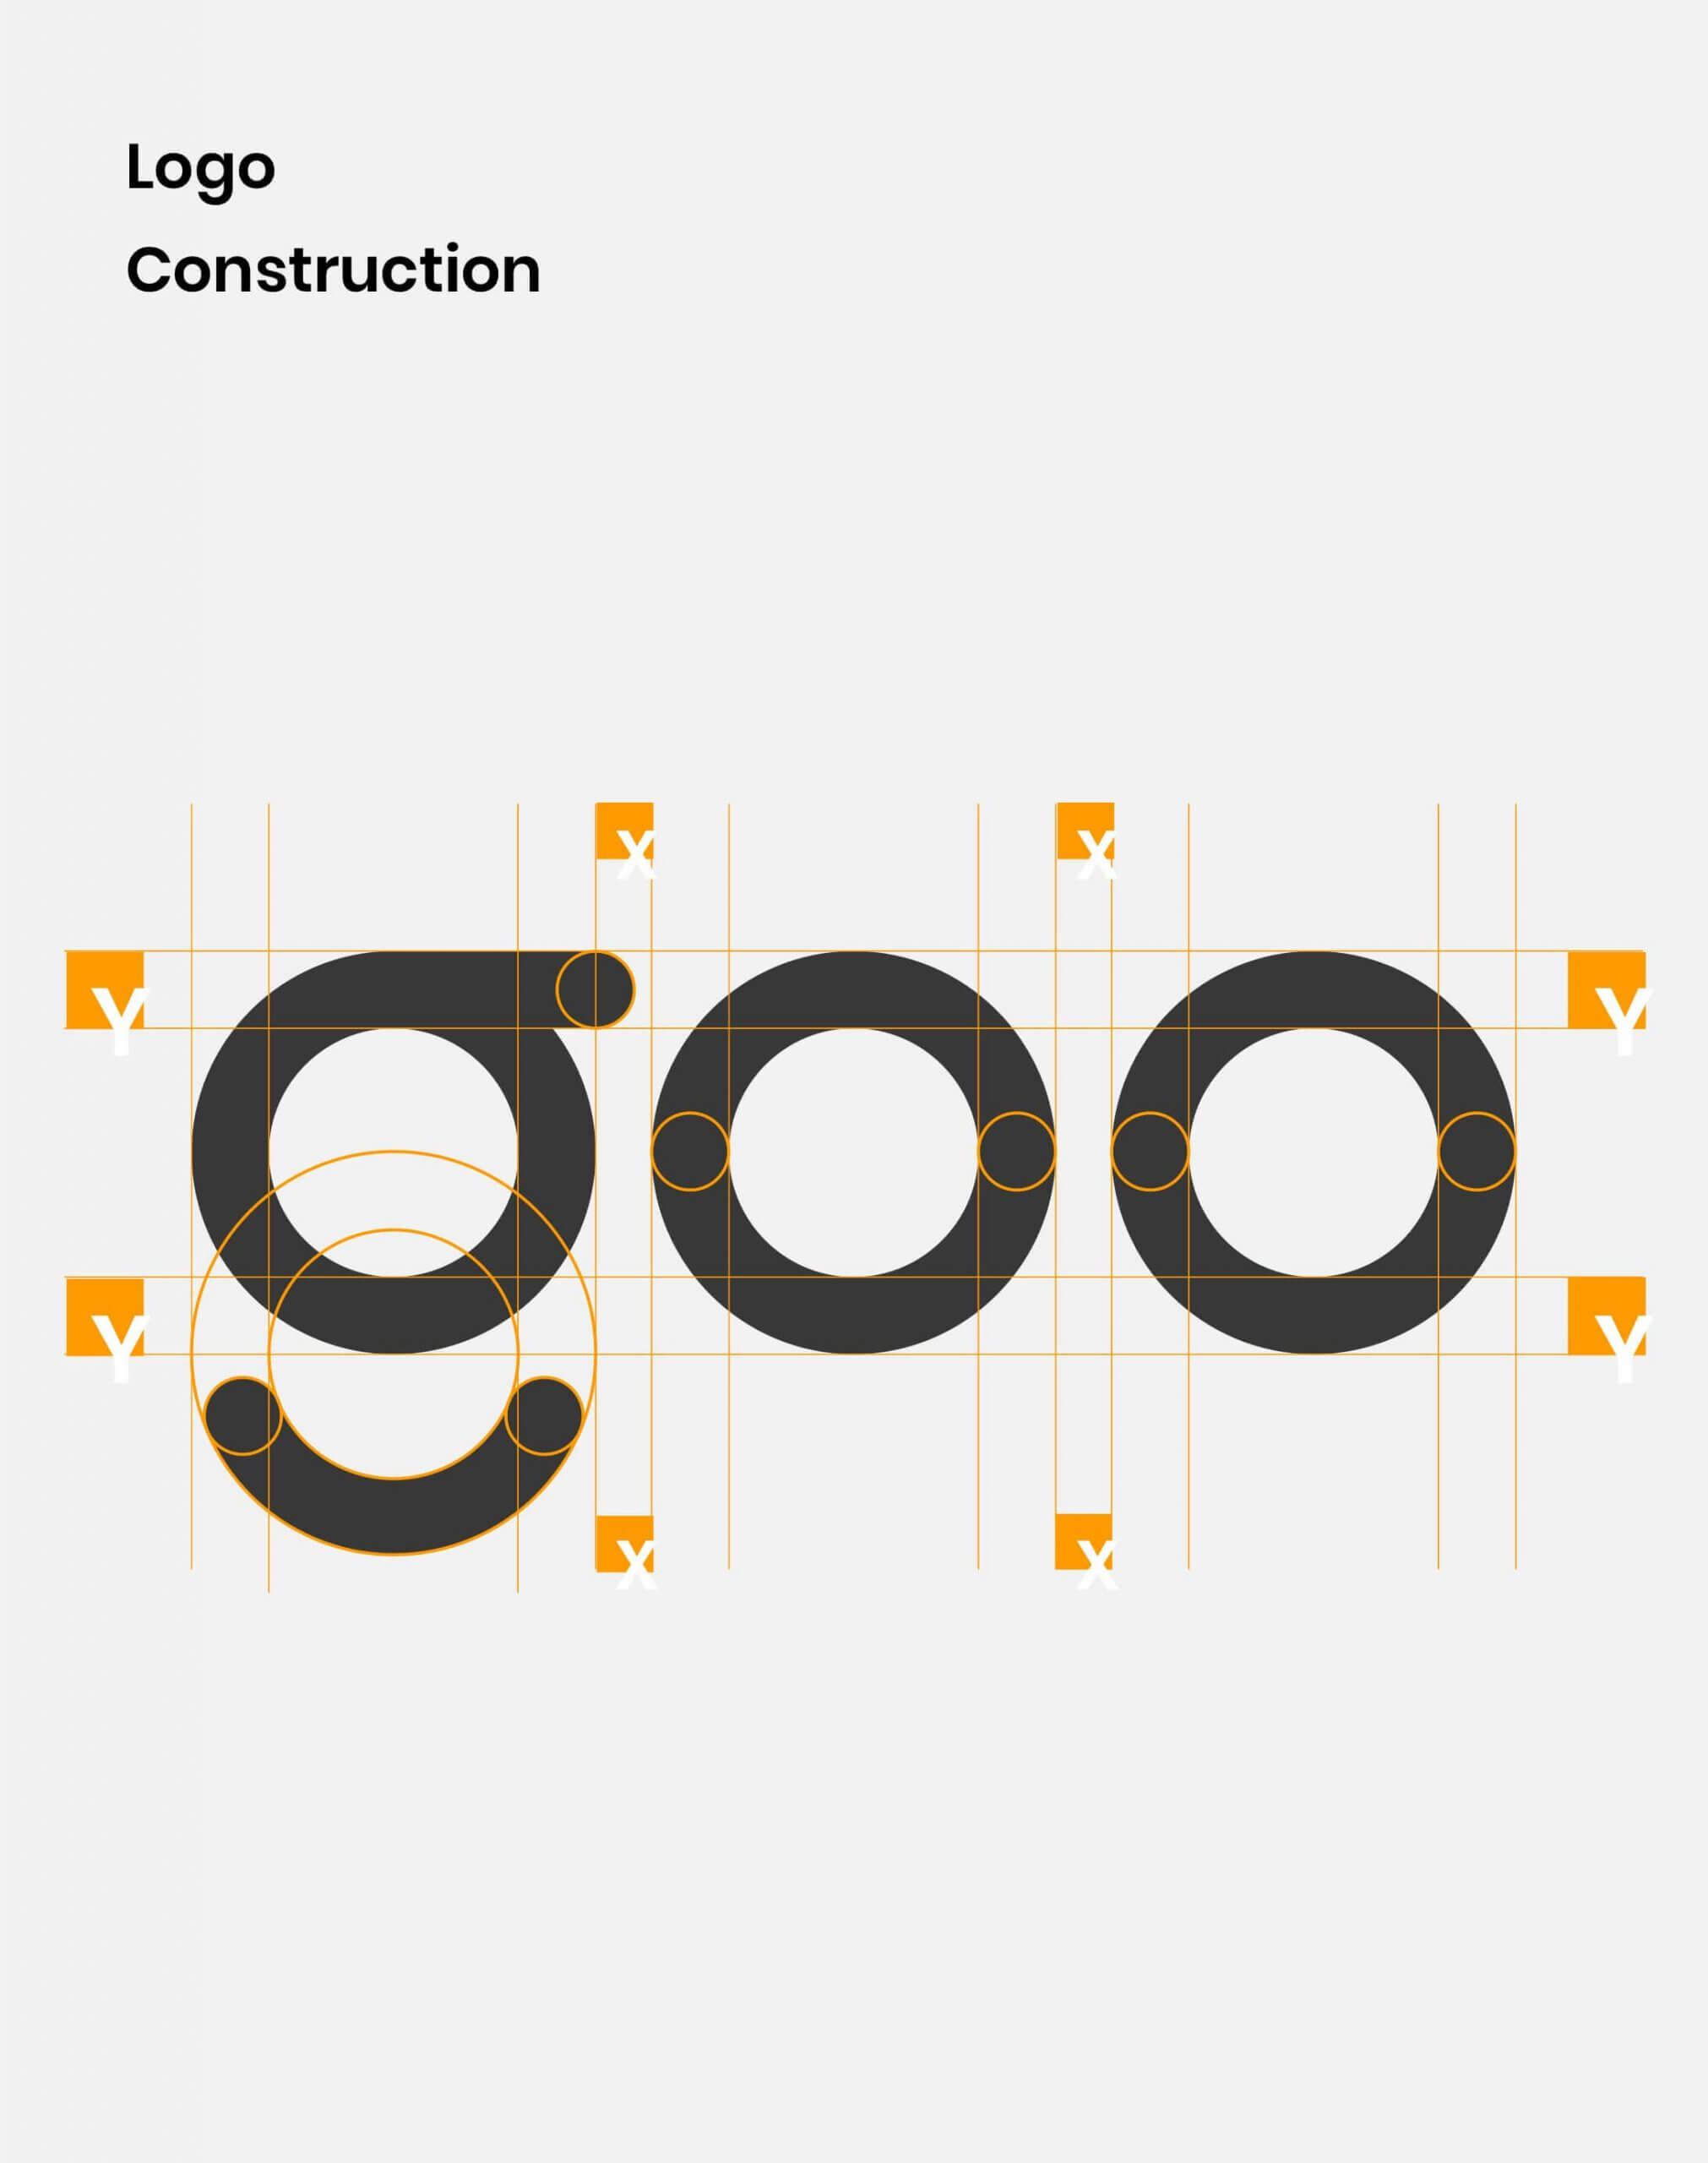 Gooshop_logo